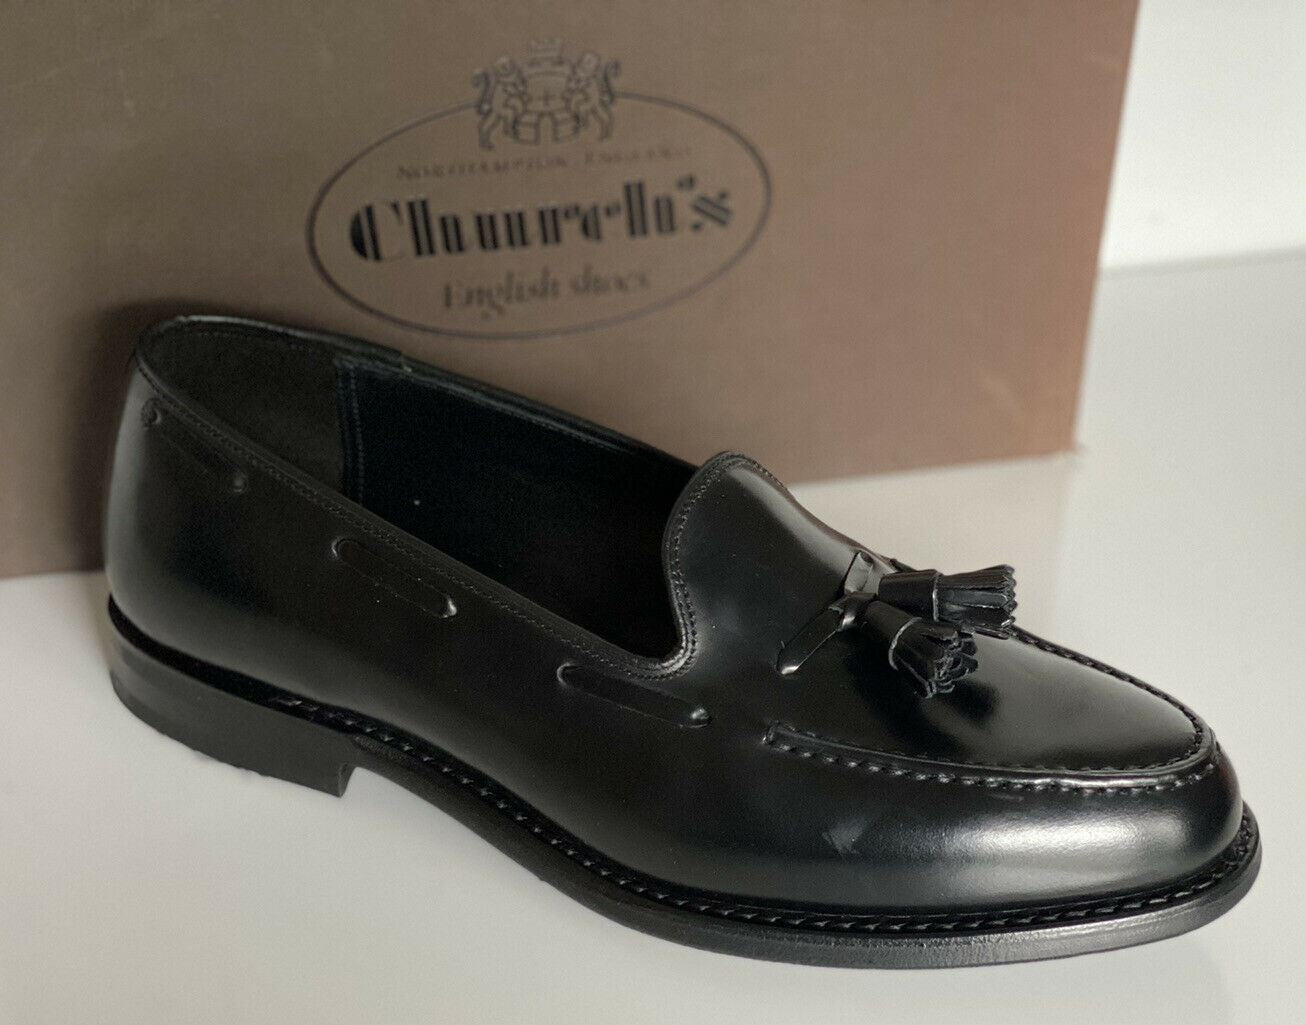 NIB Church's Men's Black Polish Binder Leather Chicane Shoes 8.5 US EDC040 UK